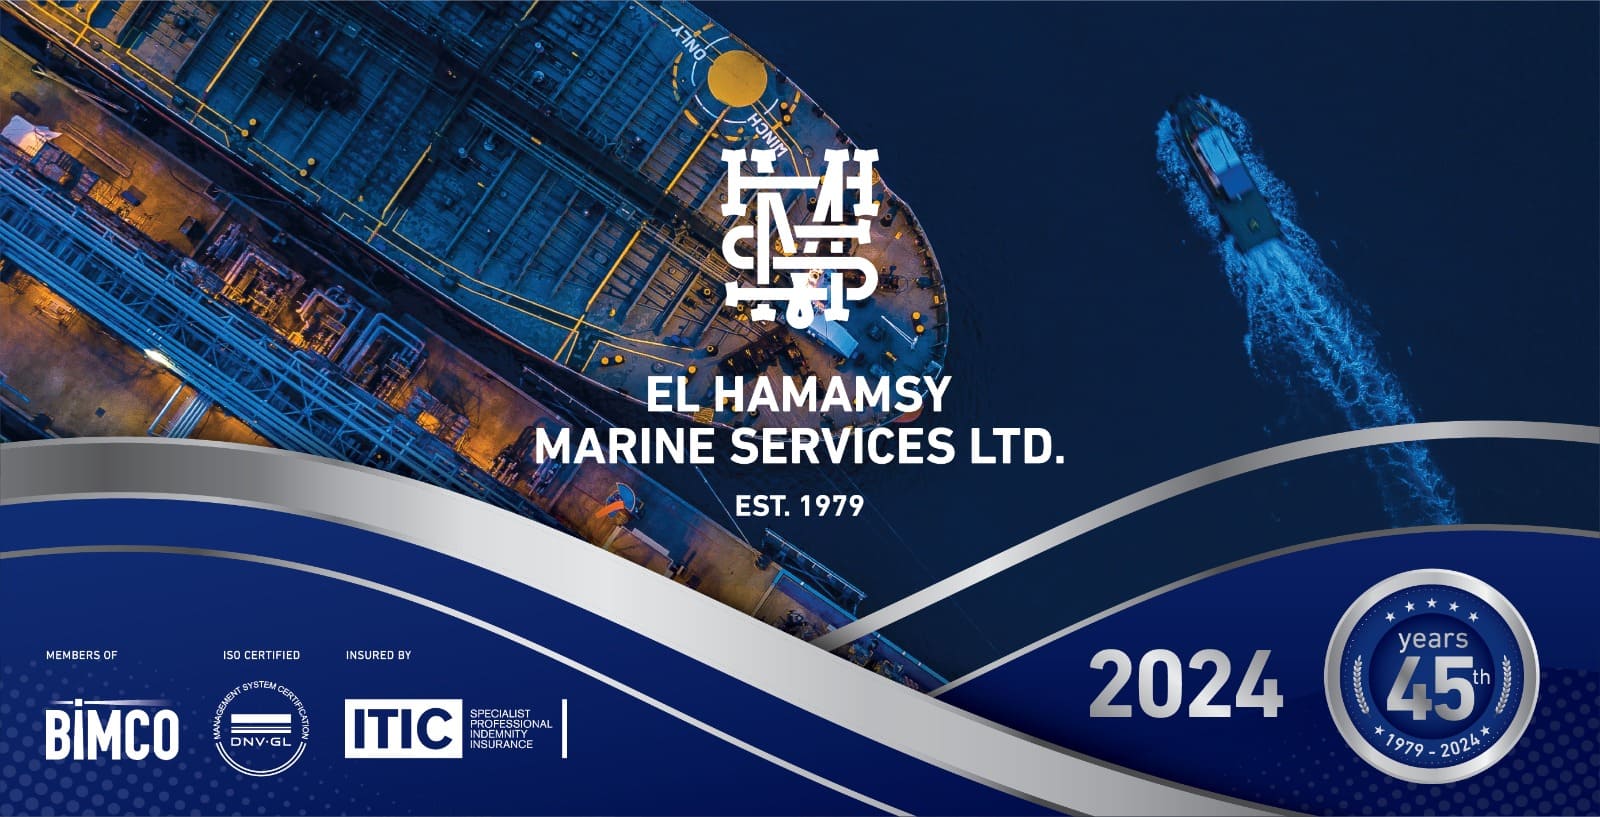 El Hamamsy Marine Services Ltd. 45th years